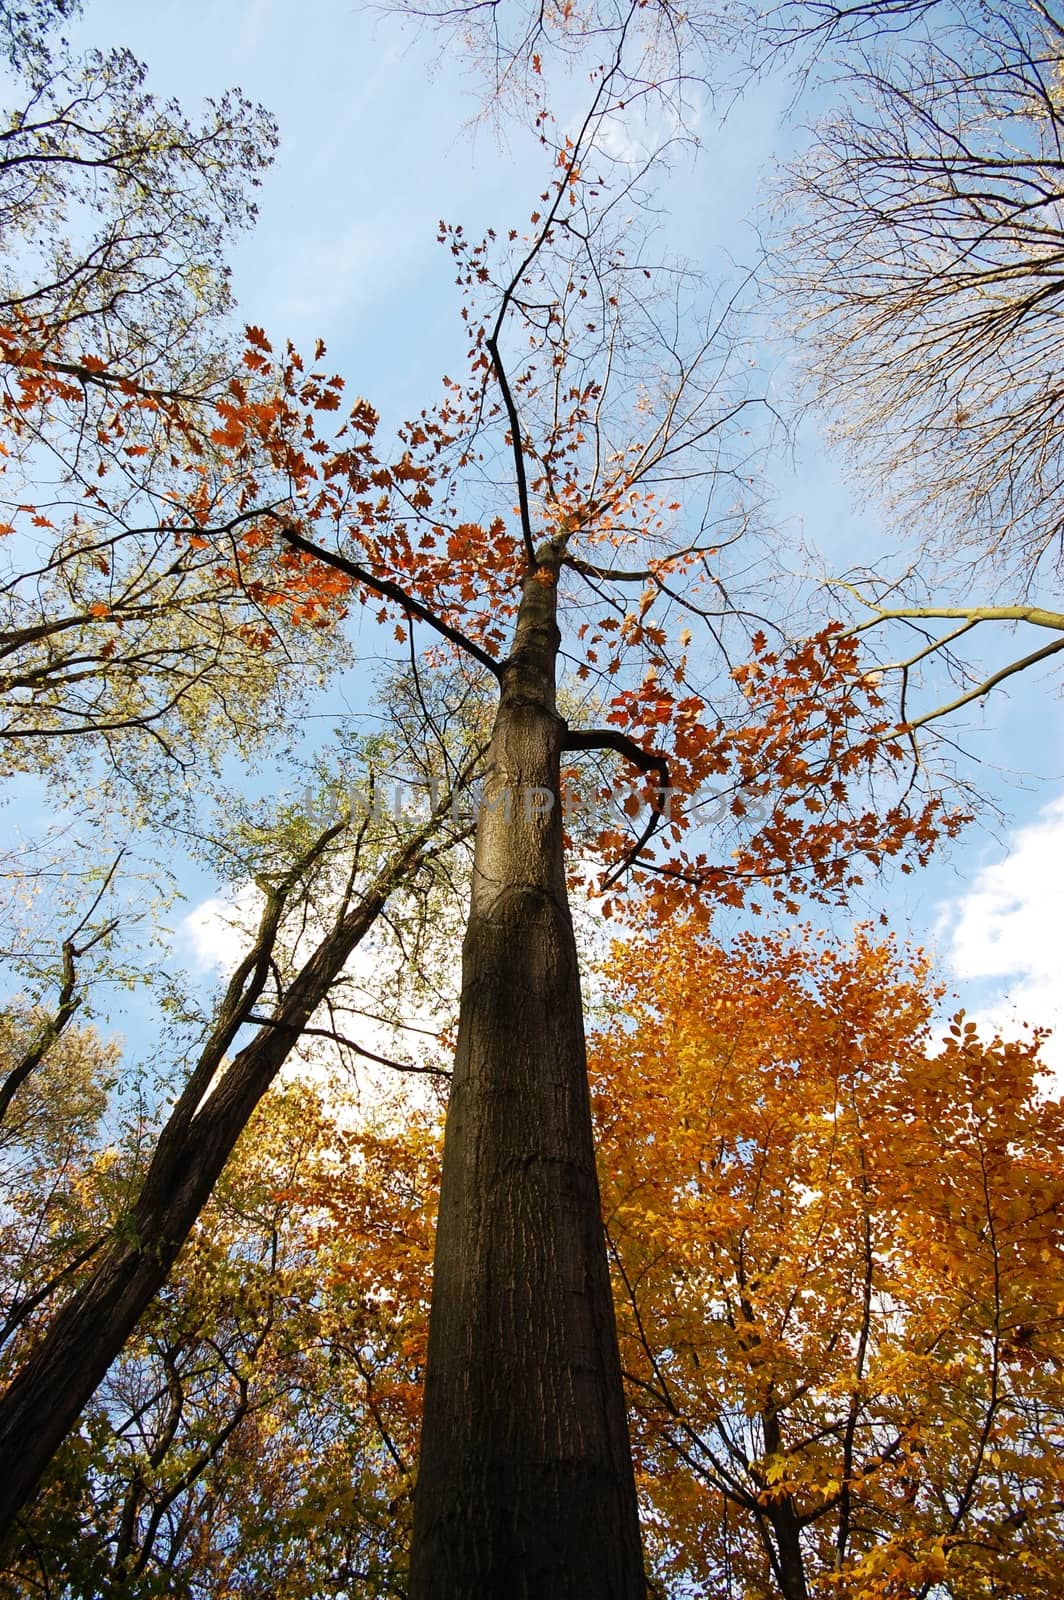 The Fall. Wide Angle Photo of the Park Trees. Fall-Autumn Theme.